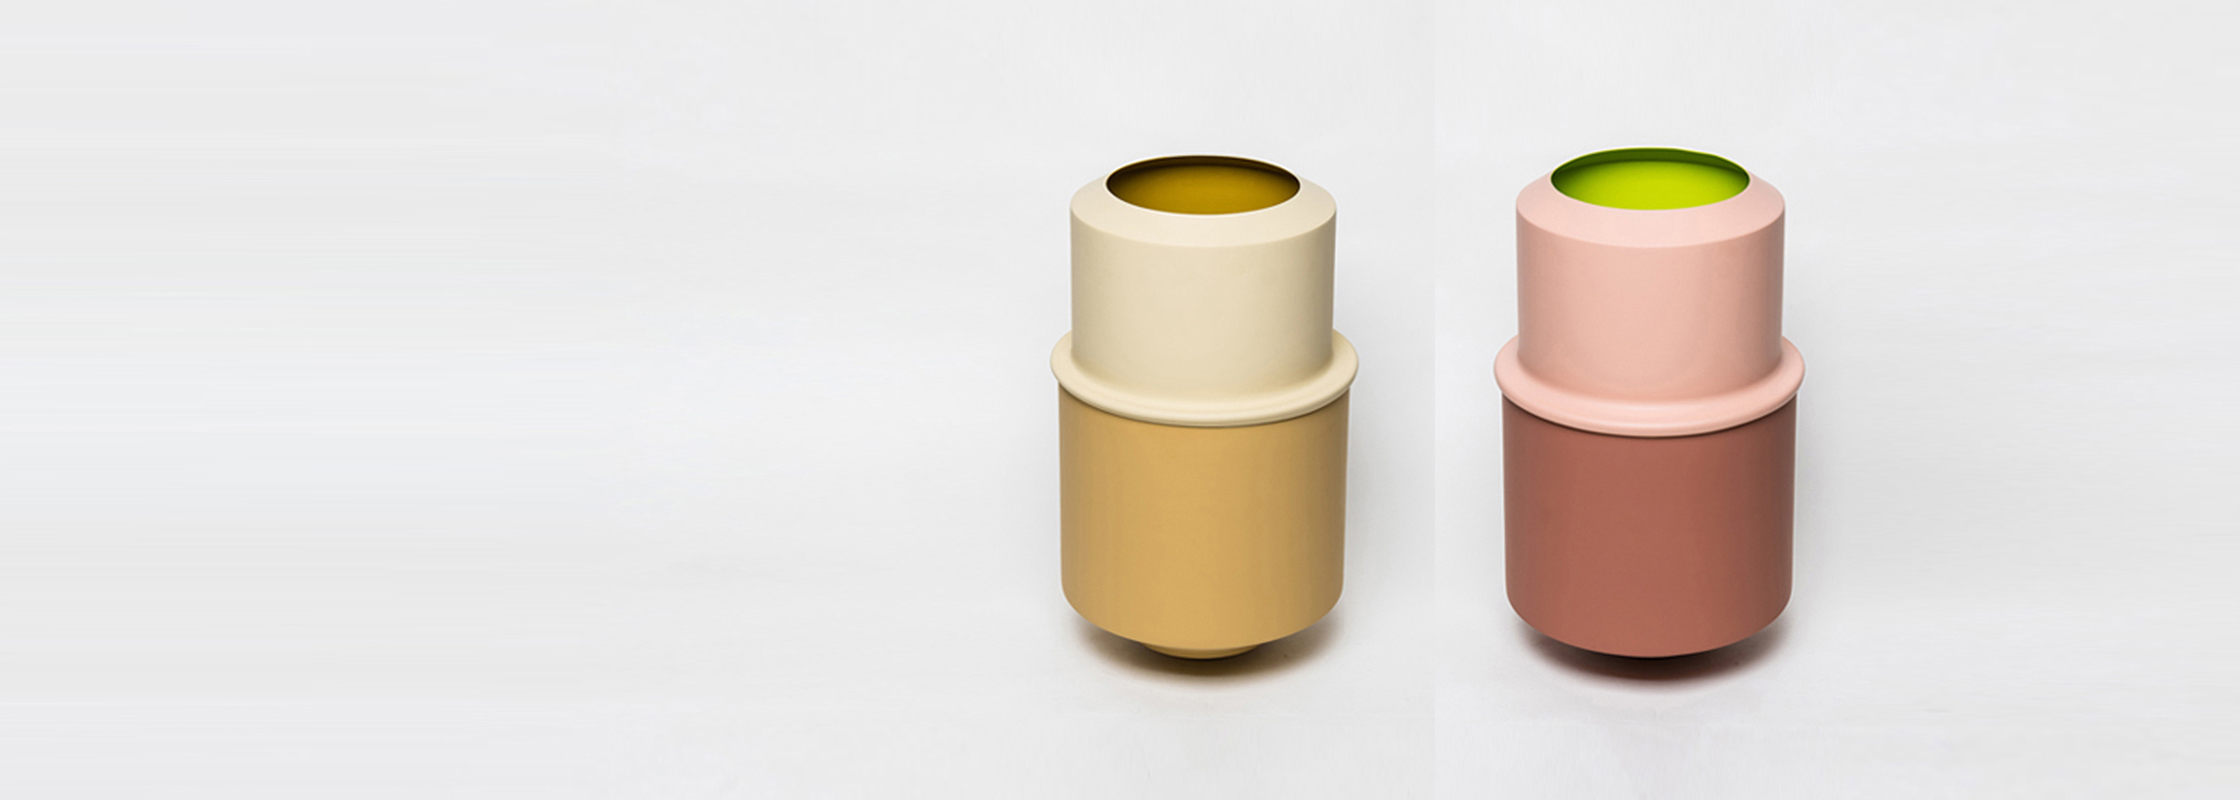 silo vase metal vessel collection send saffron desert color nude terracotta lime